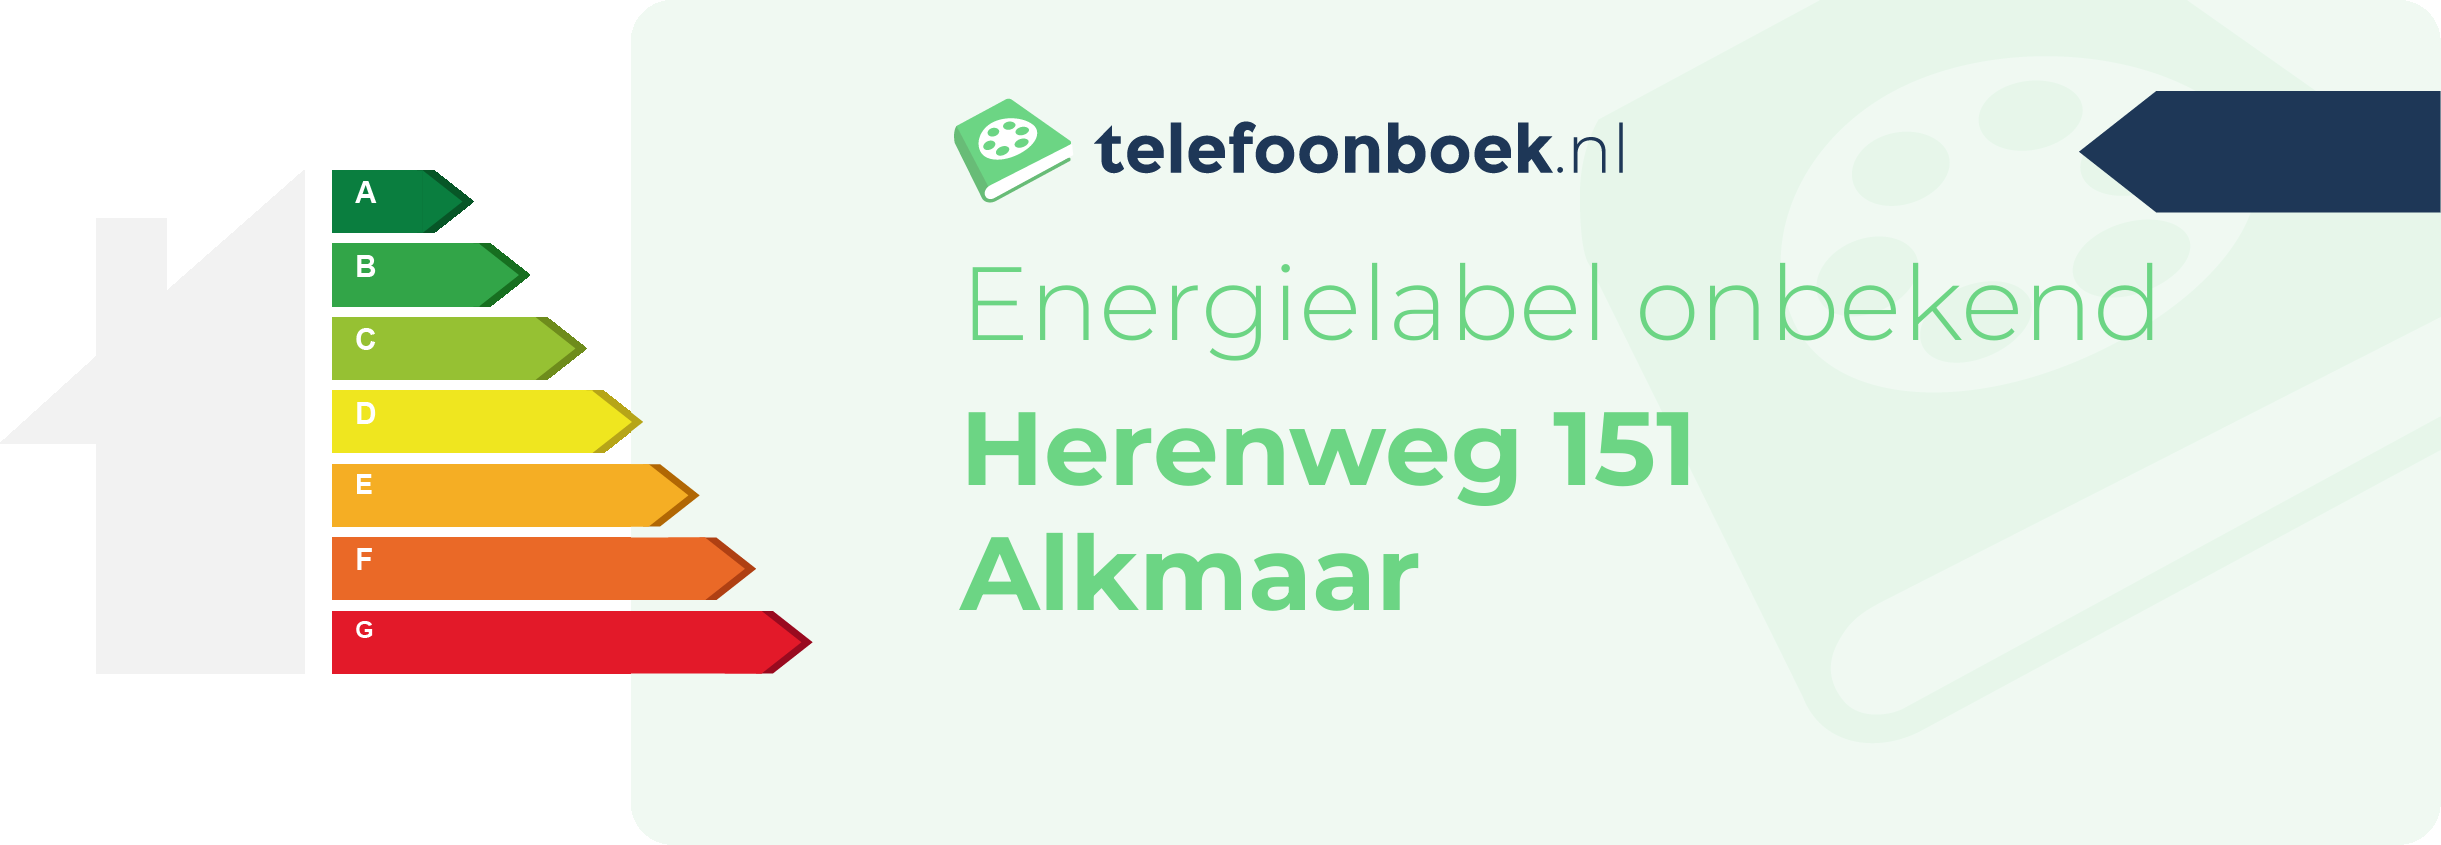 Energielabel Herenweg 151 Alkmaar